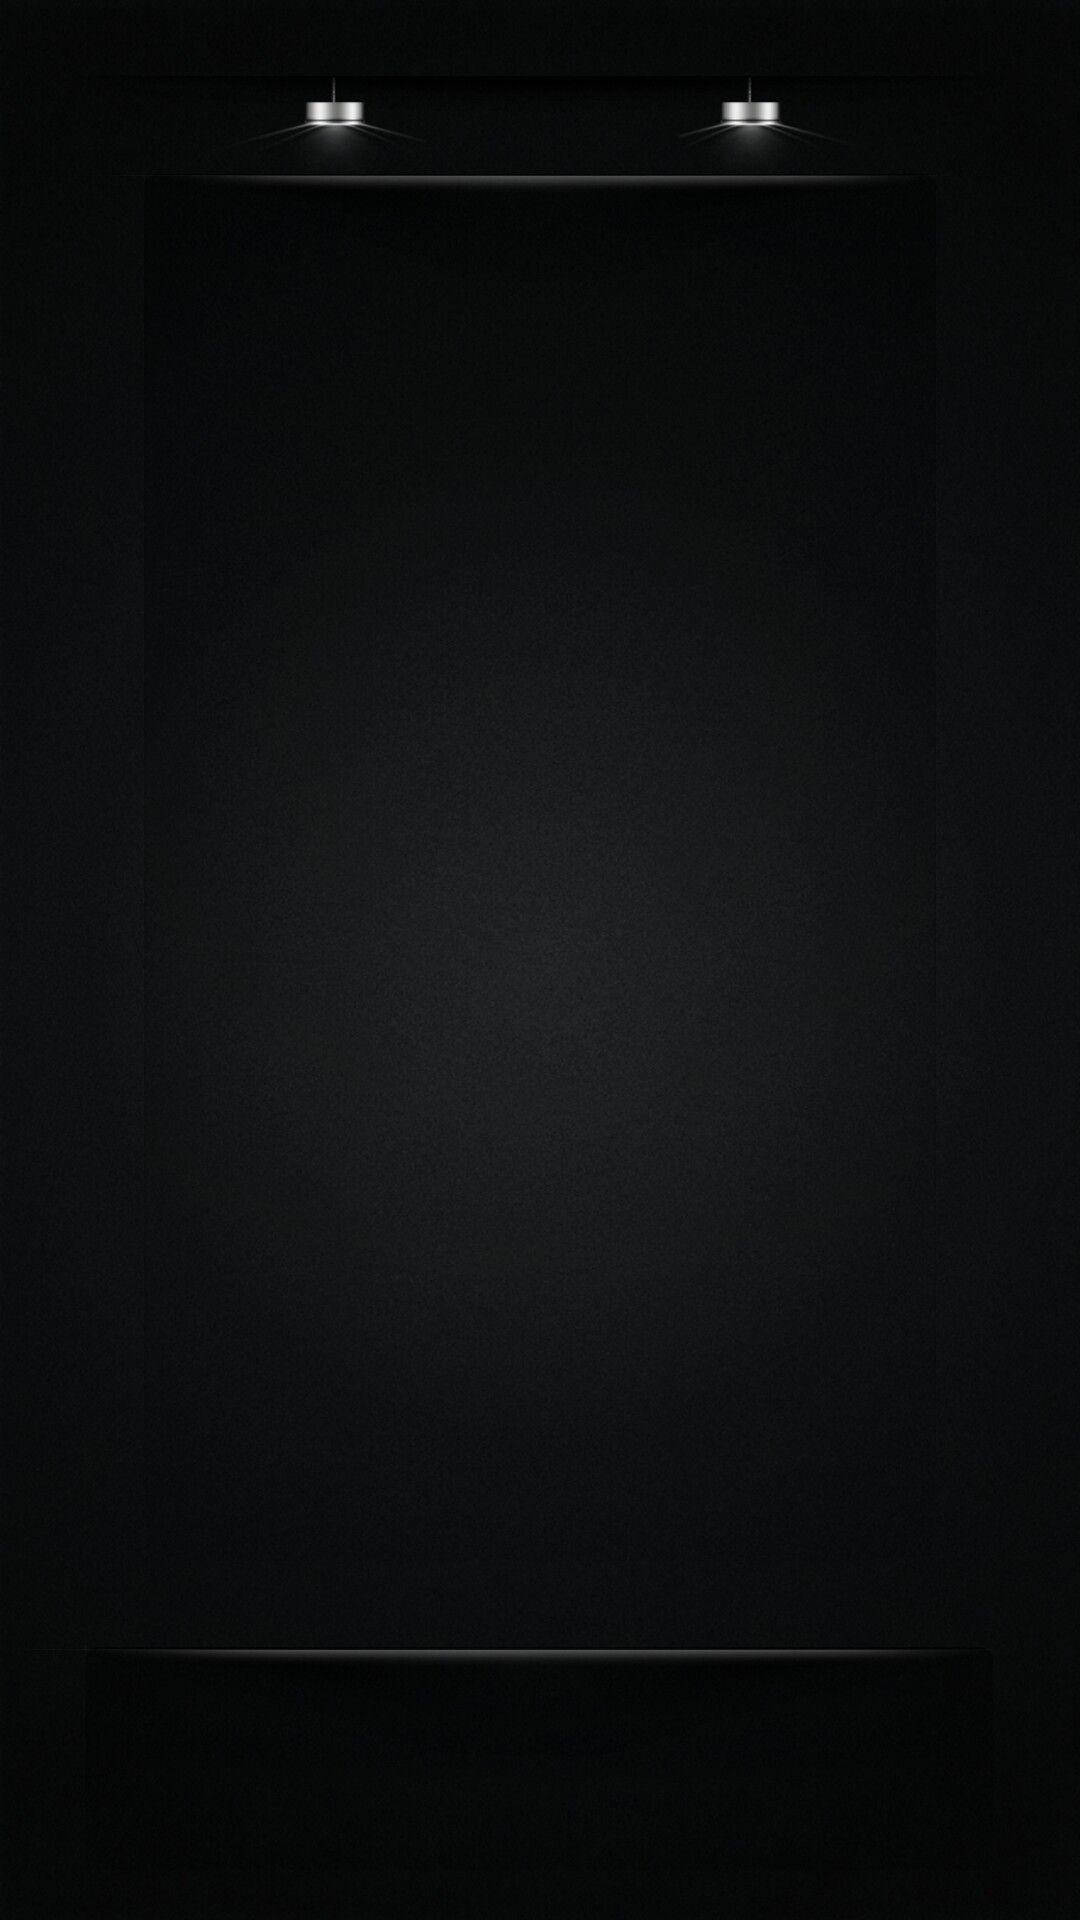 Dark Phone Canvas With Lights Background